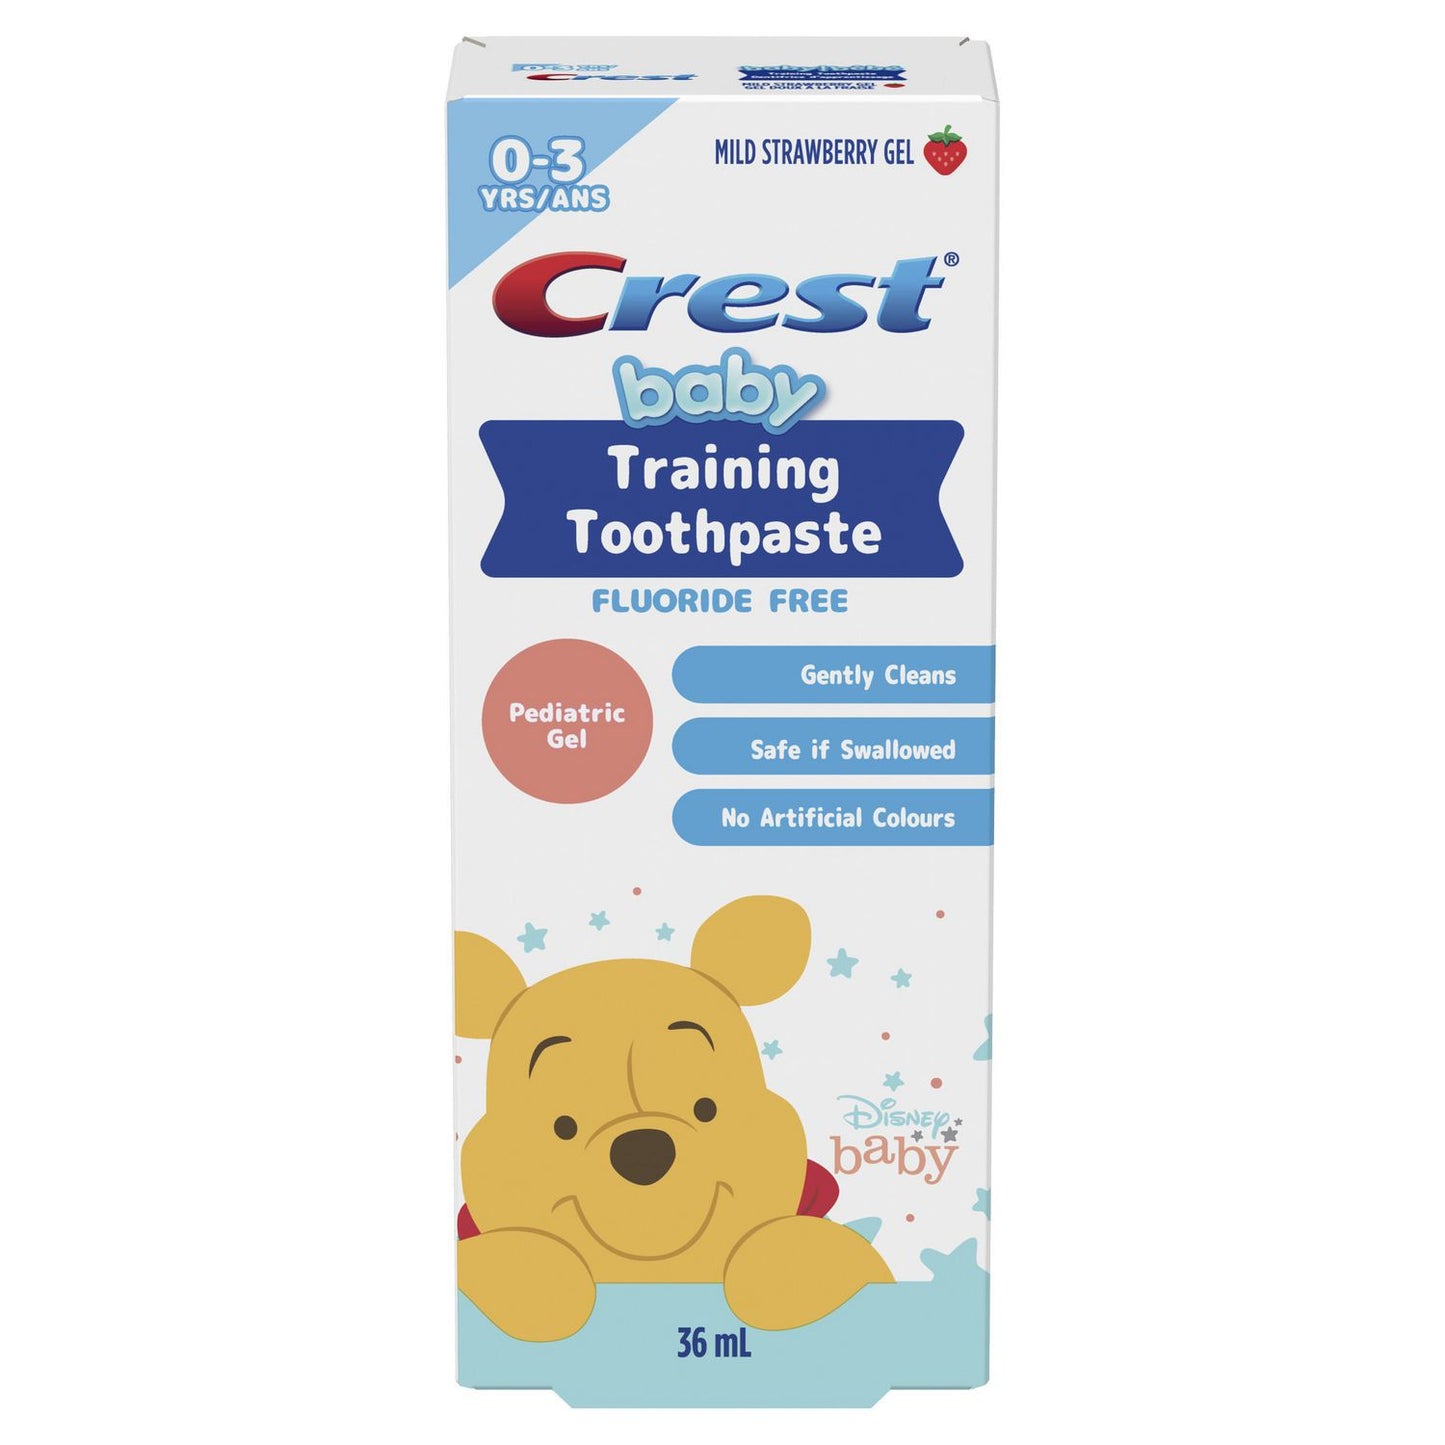 Crest baby training toothpaste